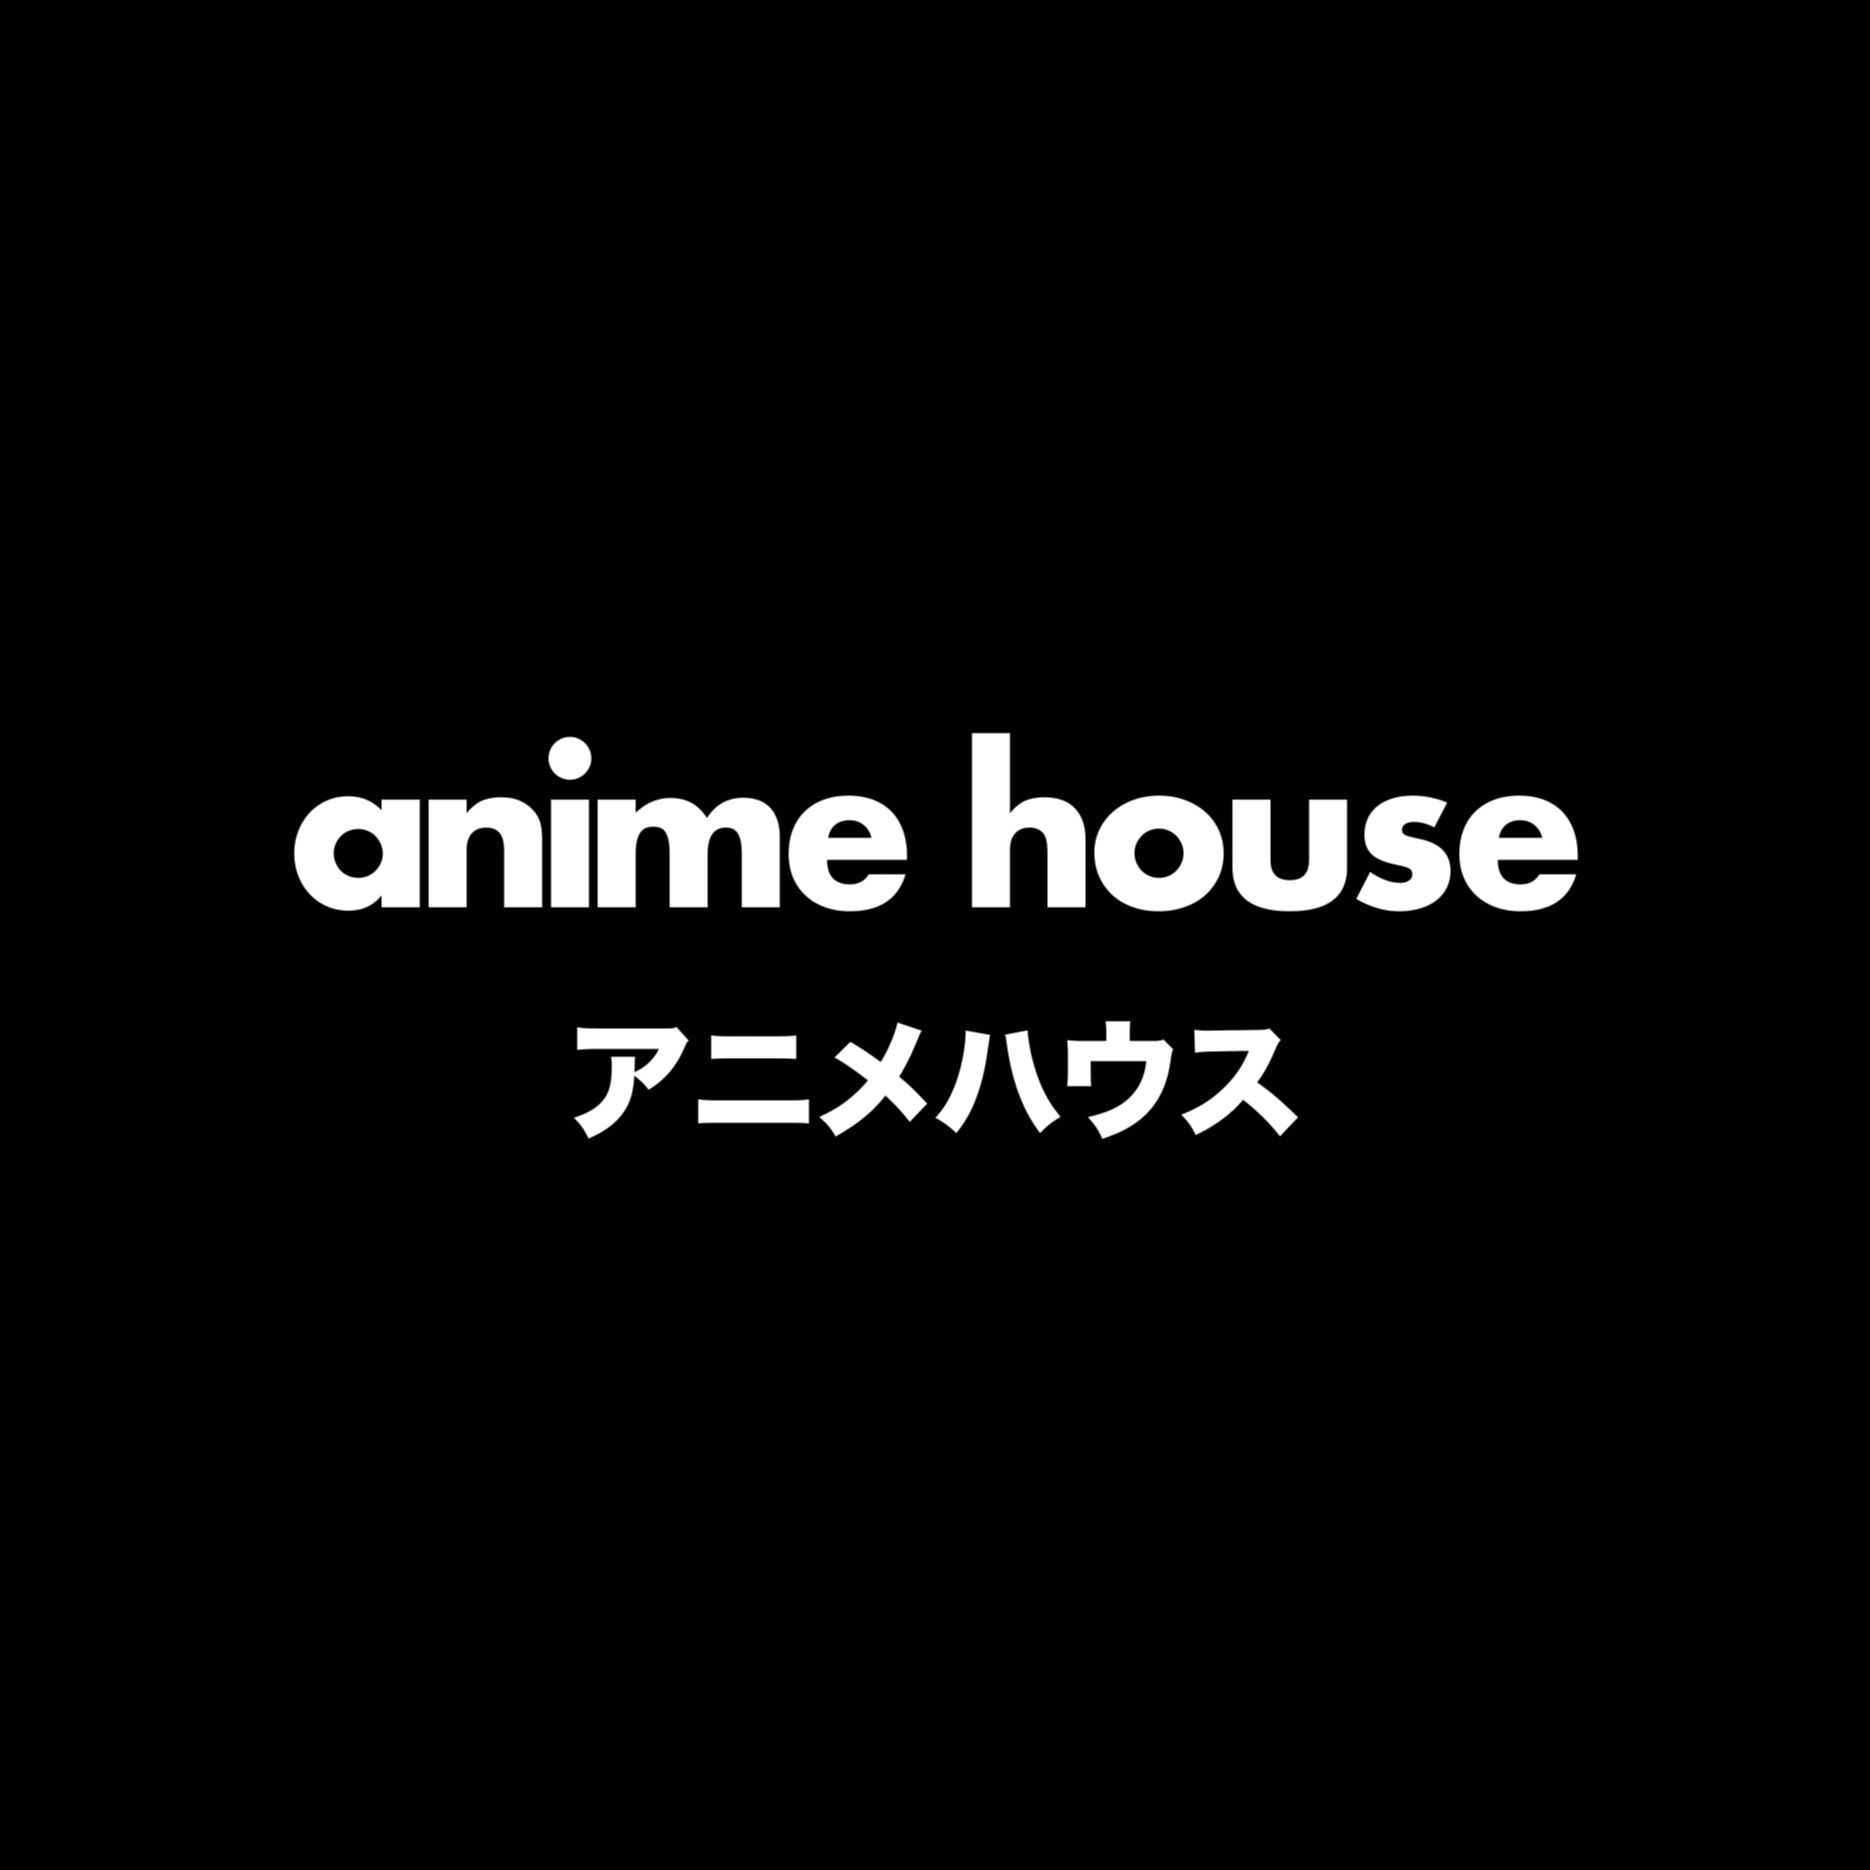 animeshouse.net - Animes House – Animes Online e - Animes House